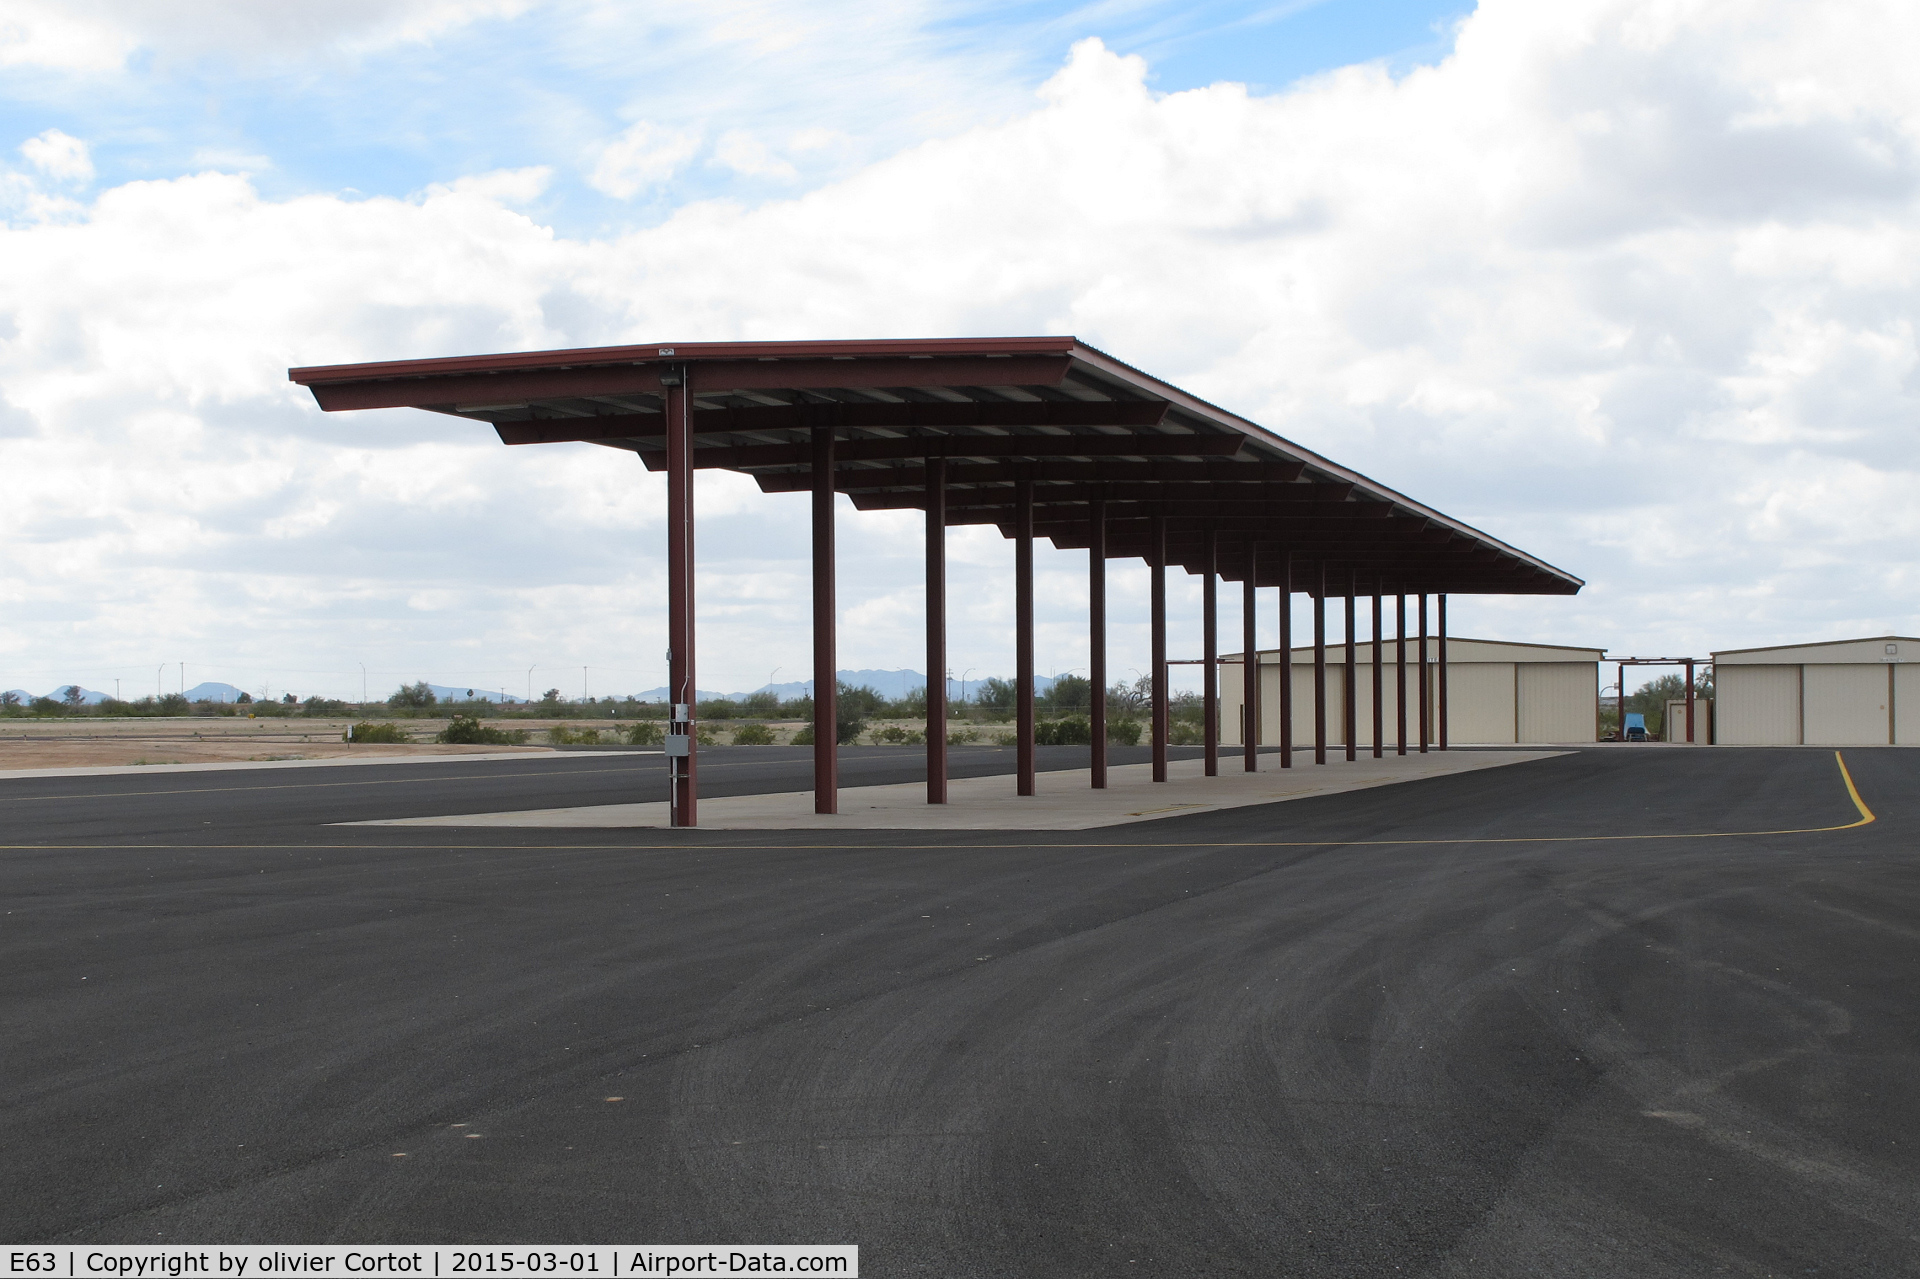 Gila Bend Municipal Airport (E63) - everything looks modern